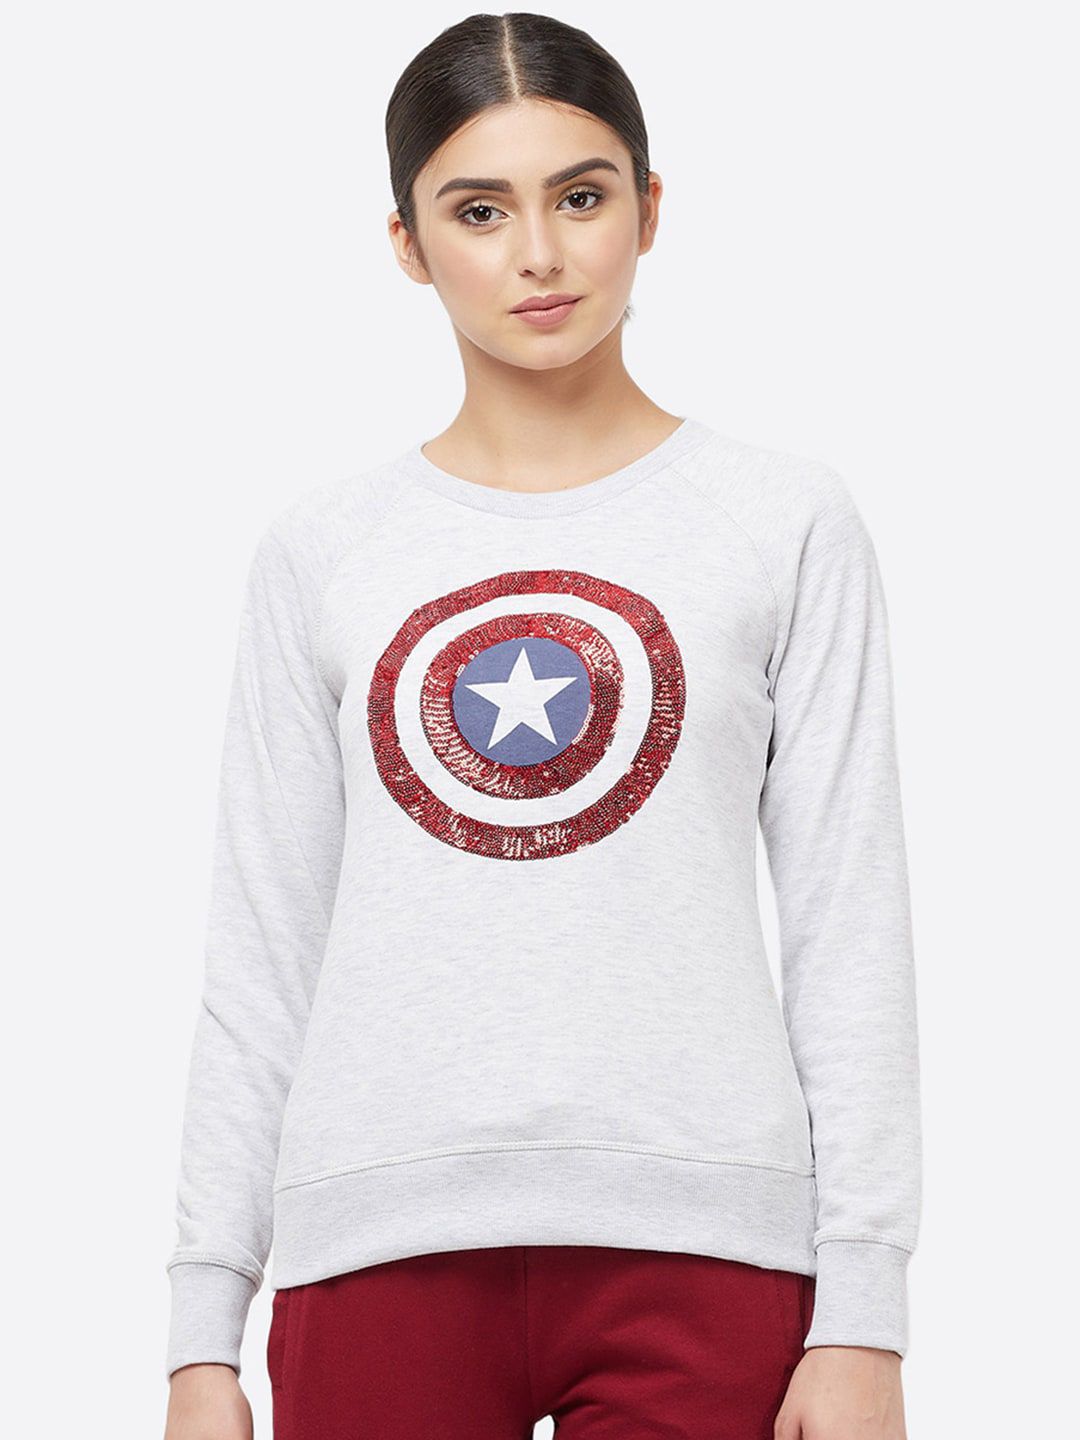 Free Authority Women Grey Captain America Printed Sweatshirt Price in India